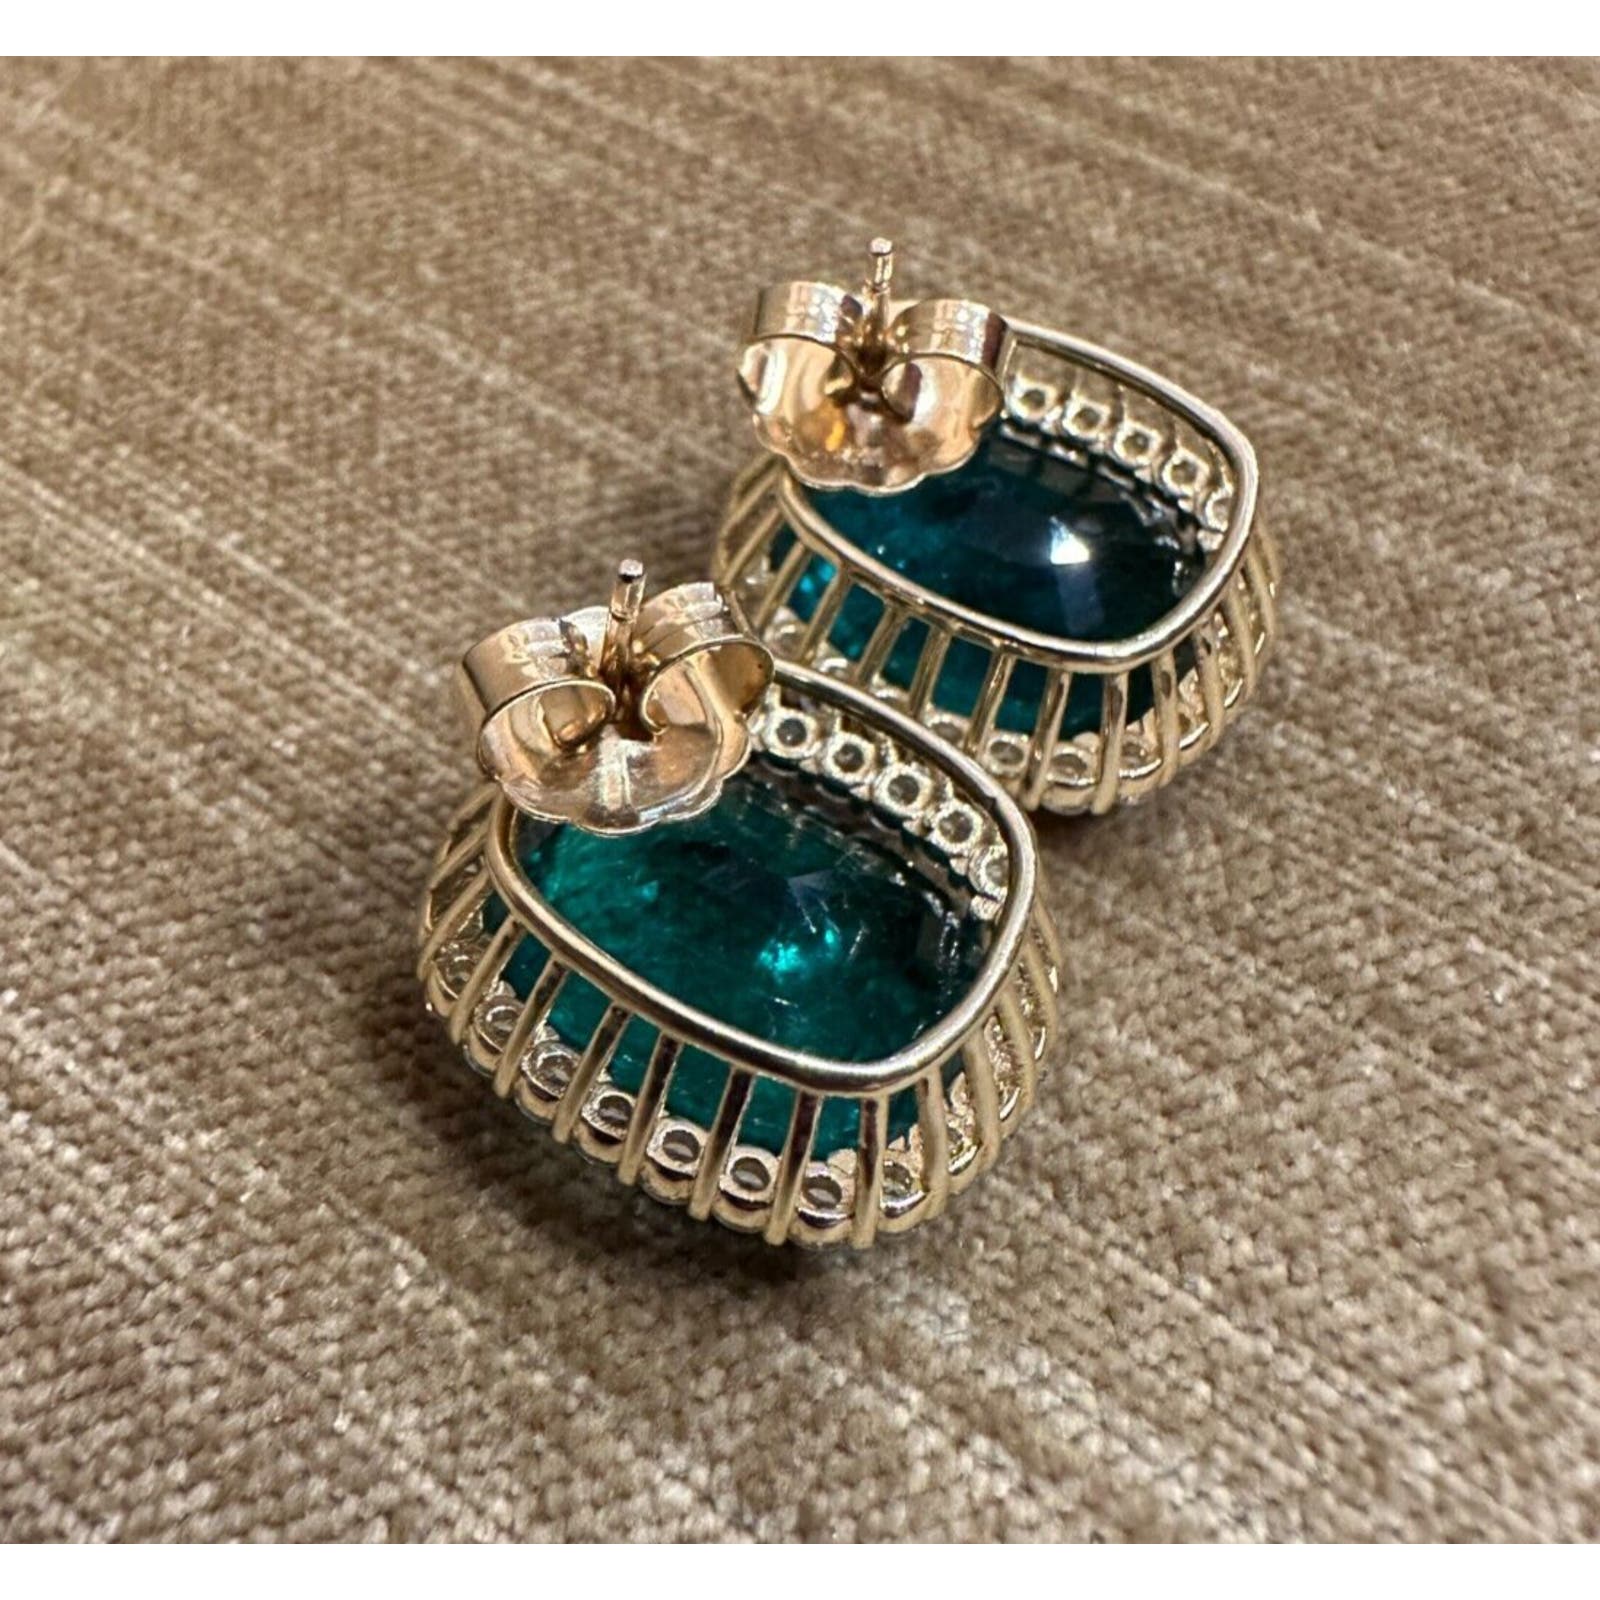 AGL 29.15 cts Cushion Emerald Halo Diamond Earrings 18k Yellow Gold -HM2450AE